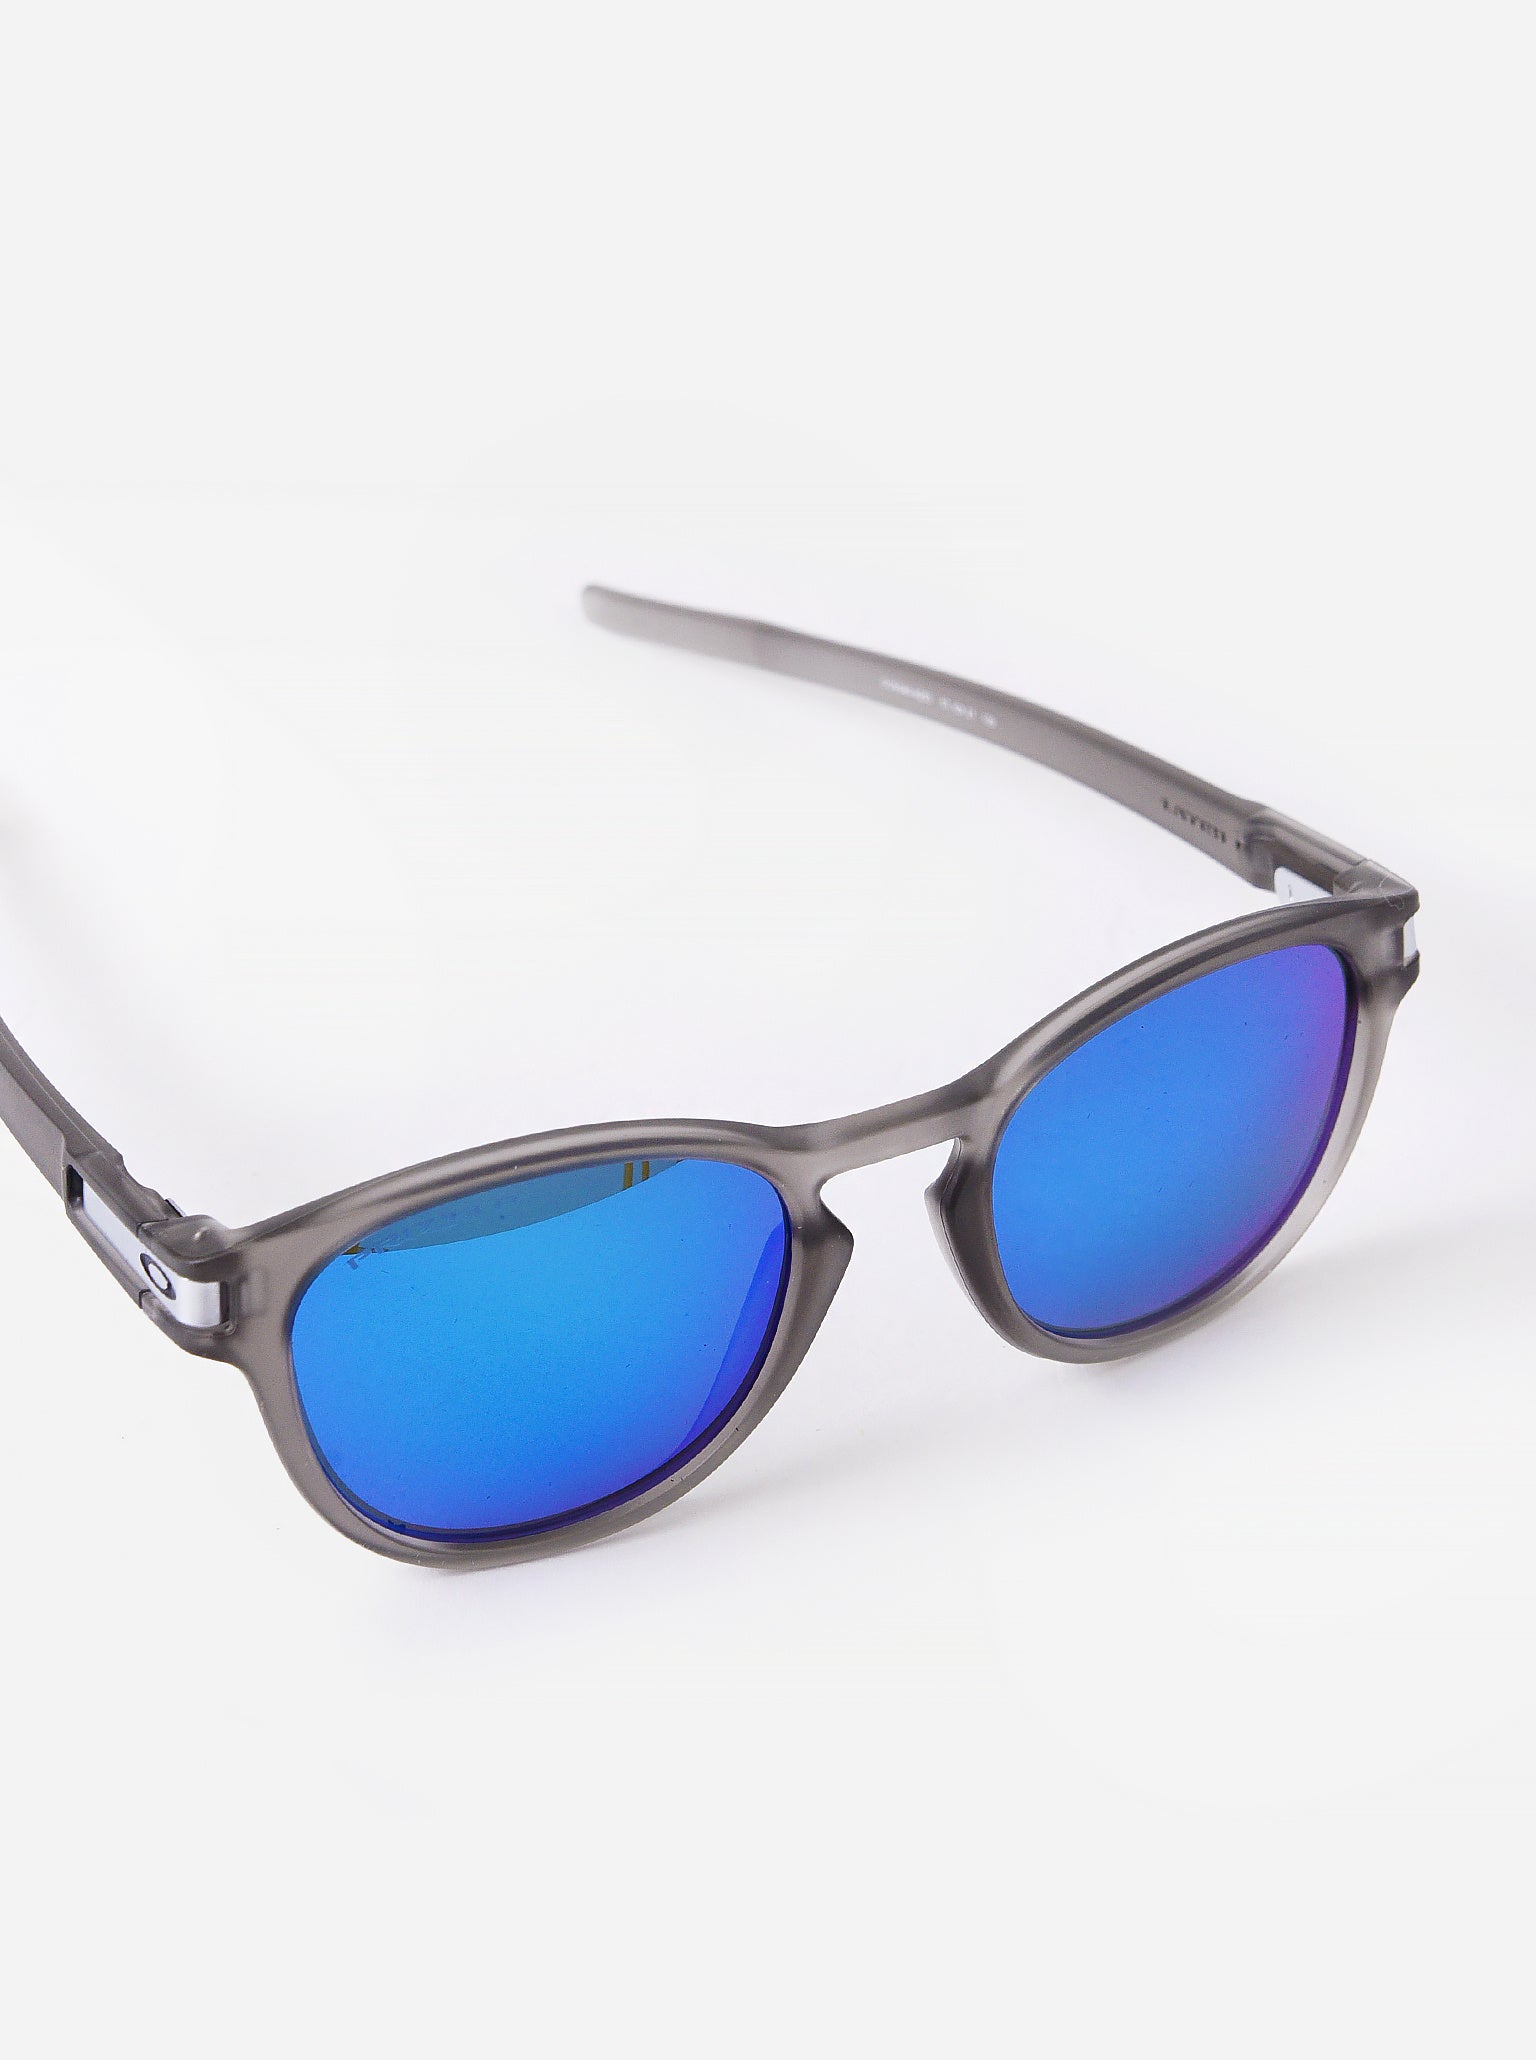 Oakley Sunglasses - Saint Bernard